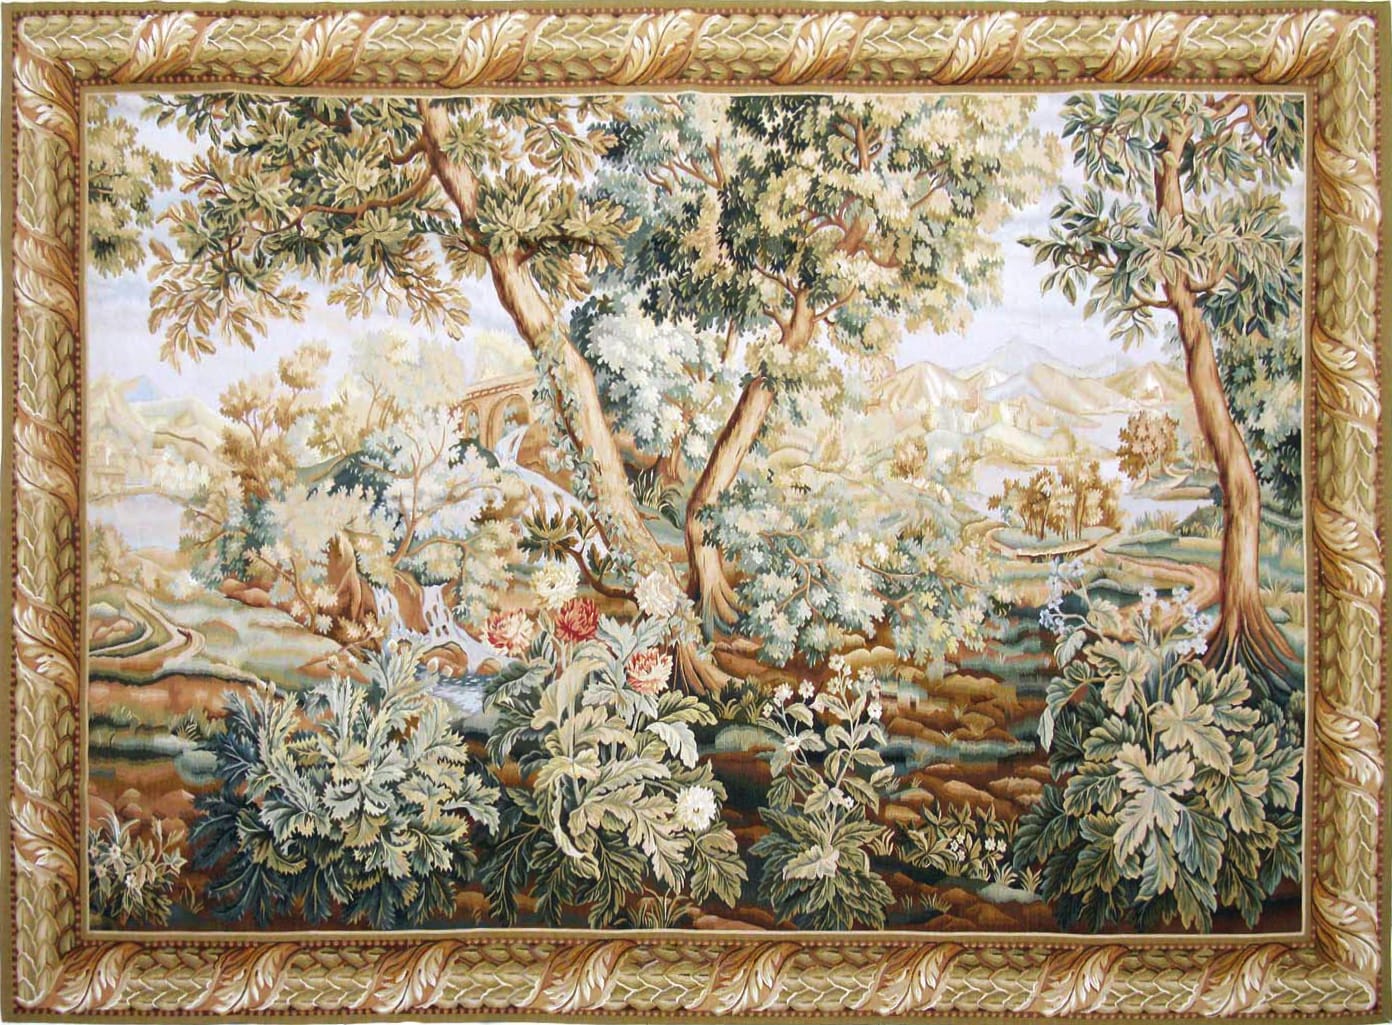 Hand Woven Landscape Verdure Style Wall Tapestry Hand Woven Landscape Verdure Style Wall Tapestry